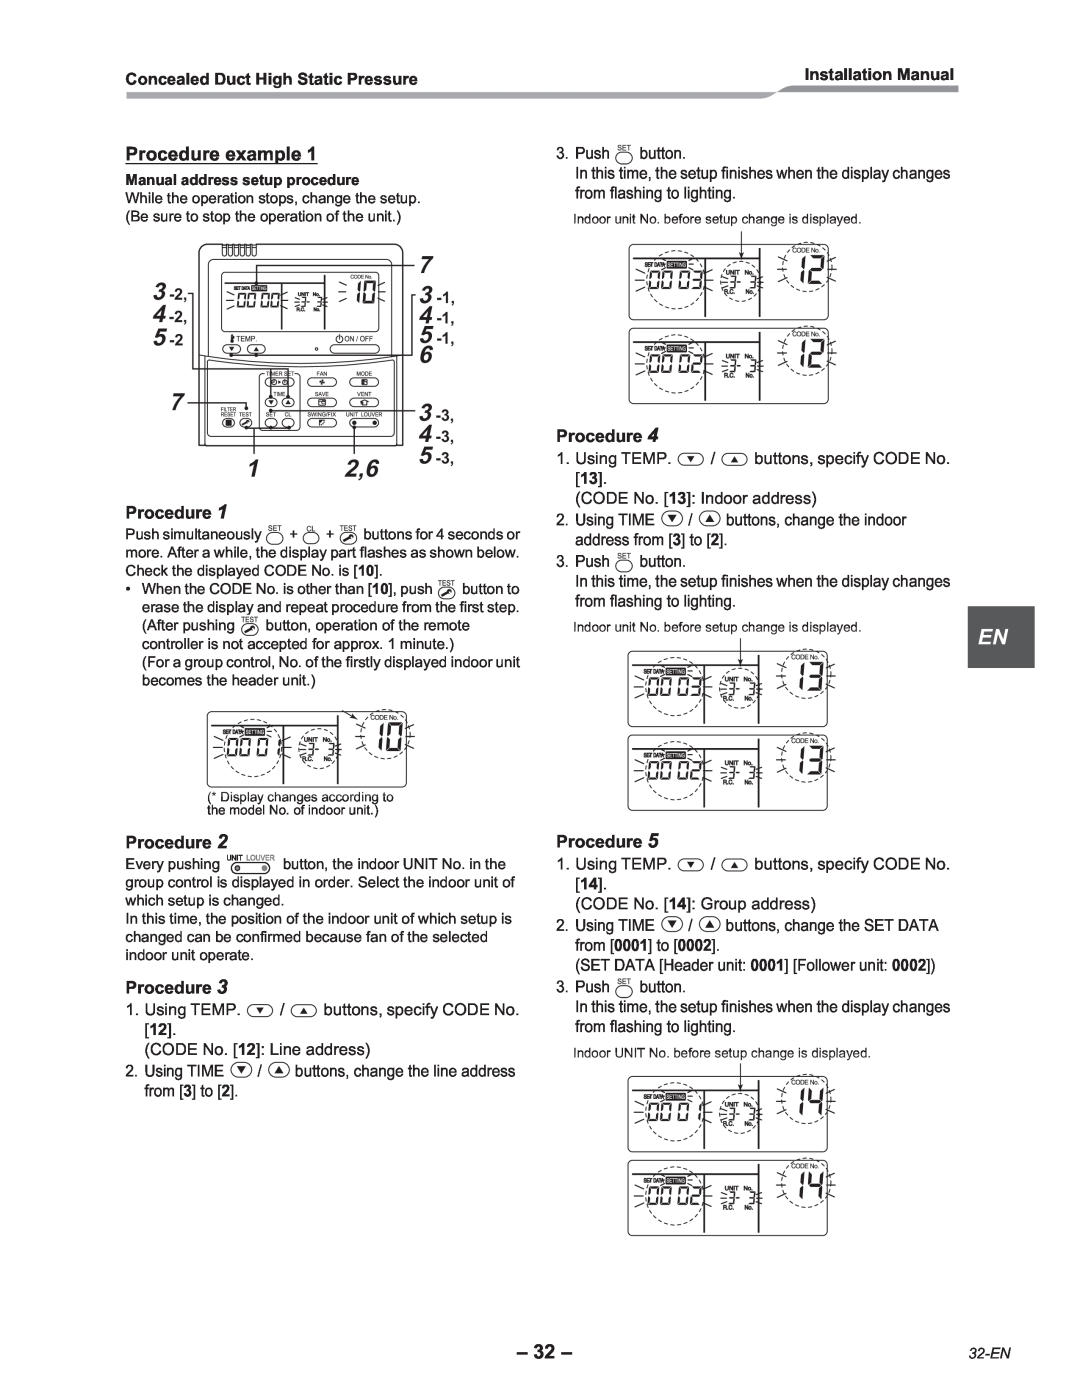 Toshiba RAV-SM2242DT-E, RAV-SM2802DT-E Procedure example, Concealed Duct High Static Pressure, Installation Manual 